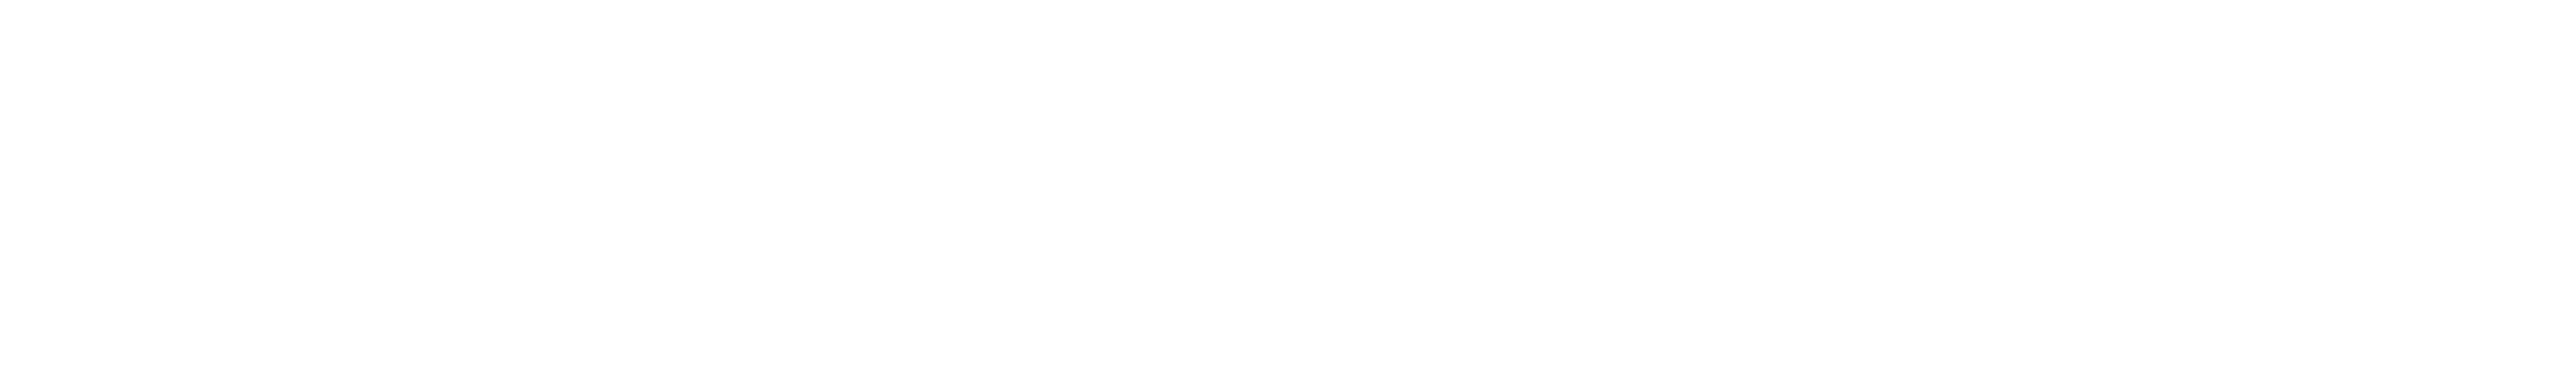 seaform footer logo